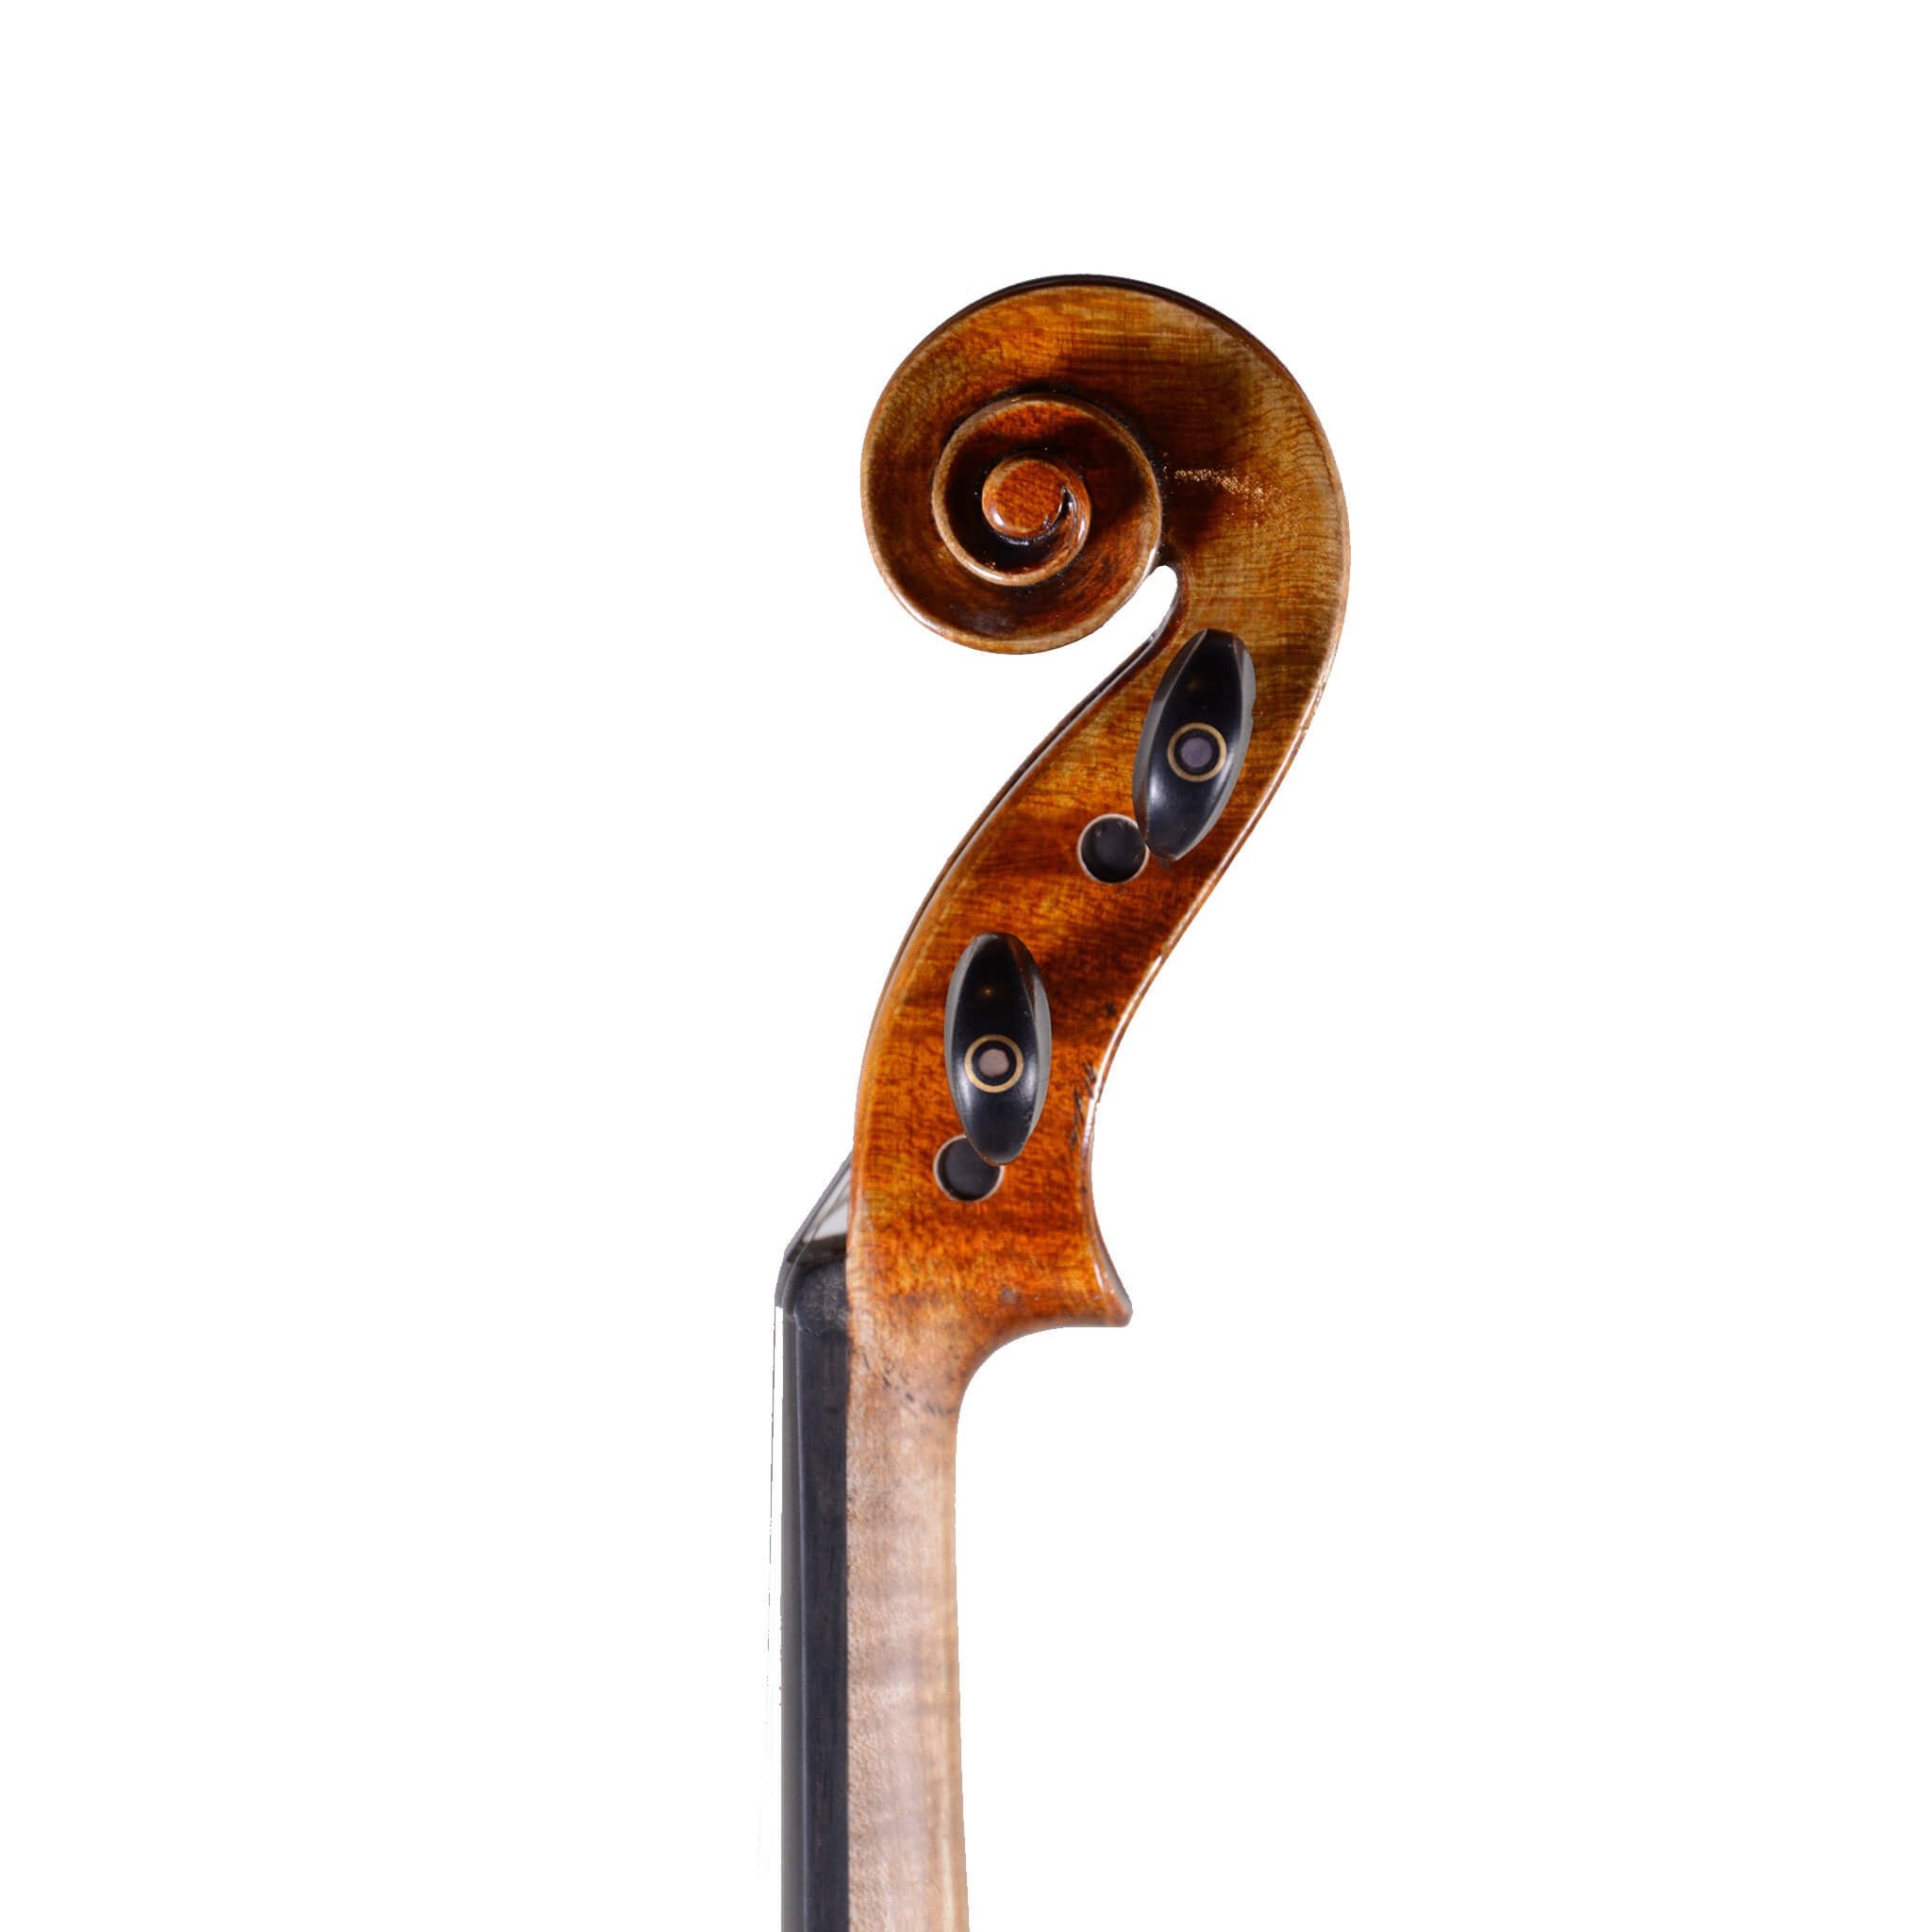 B-Stock Fiddlerman Artist Violin Outfit